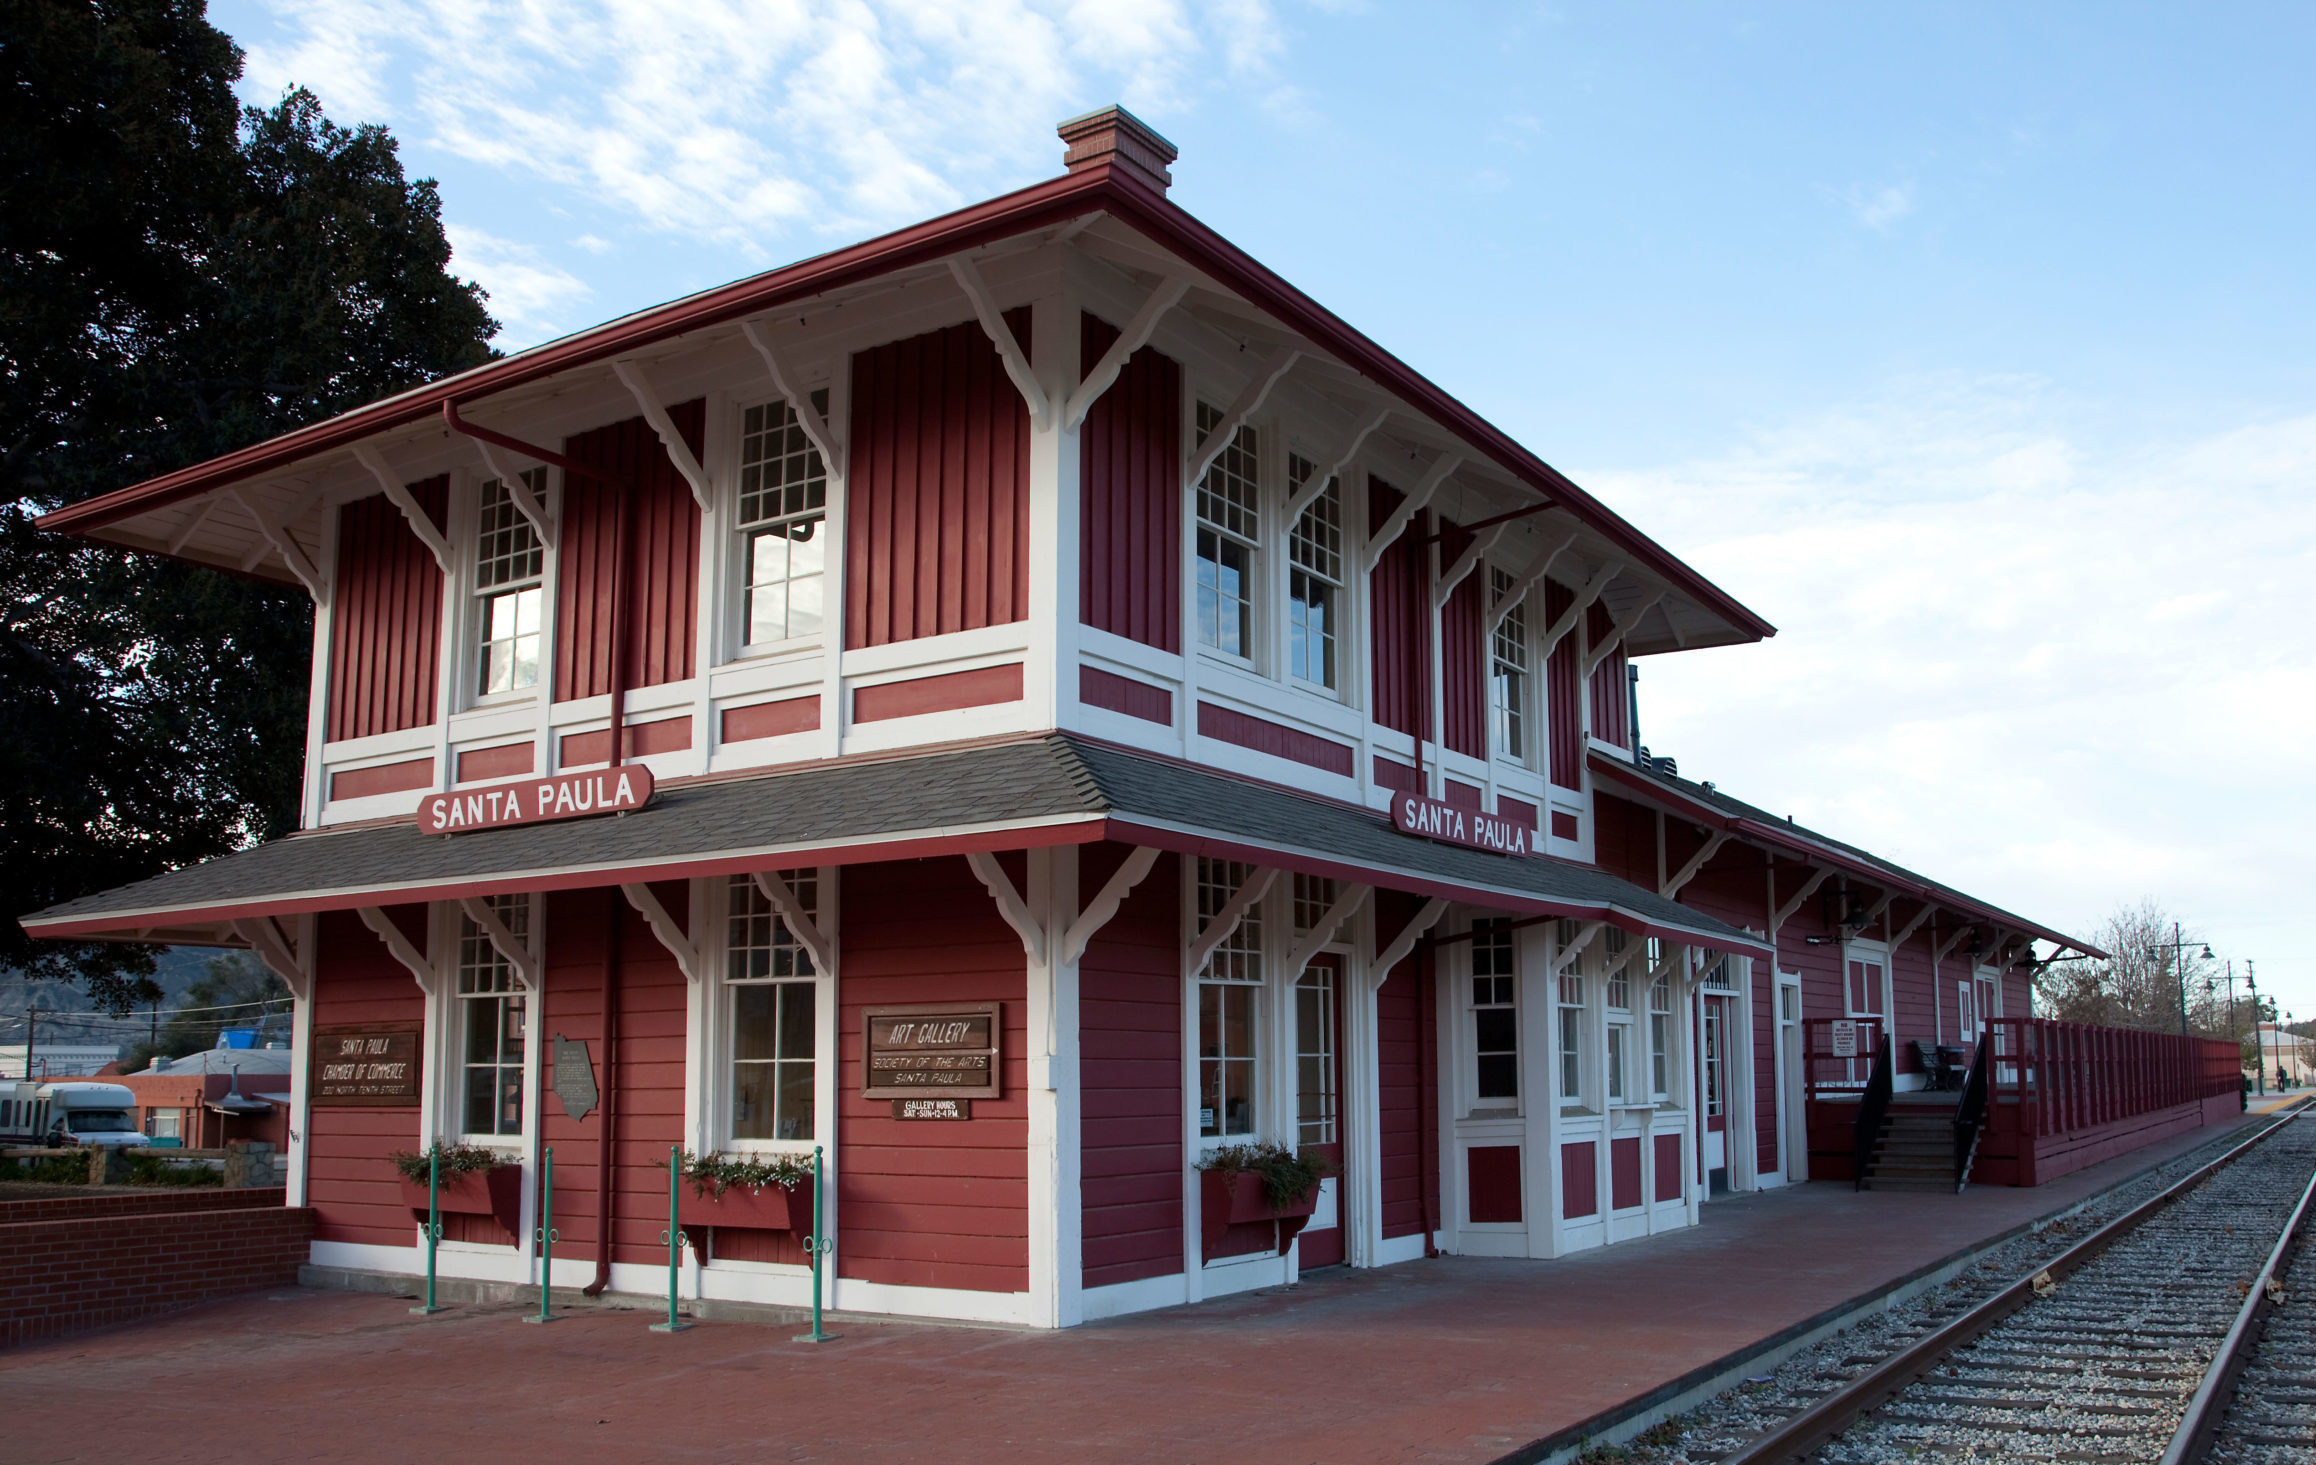 The historic 1887 Southern Pacific Railroad Depot in Santa Paula California, located in Ventura County, north of Los Angeles.